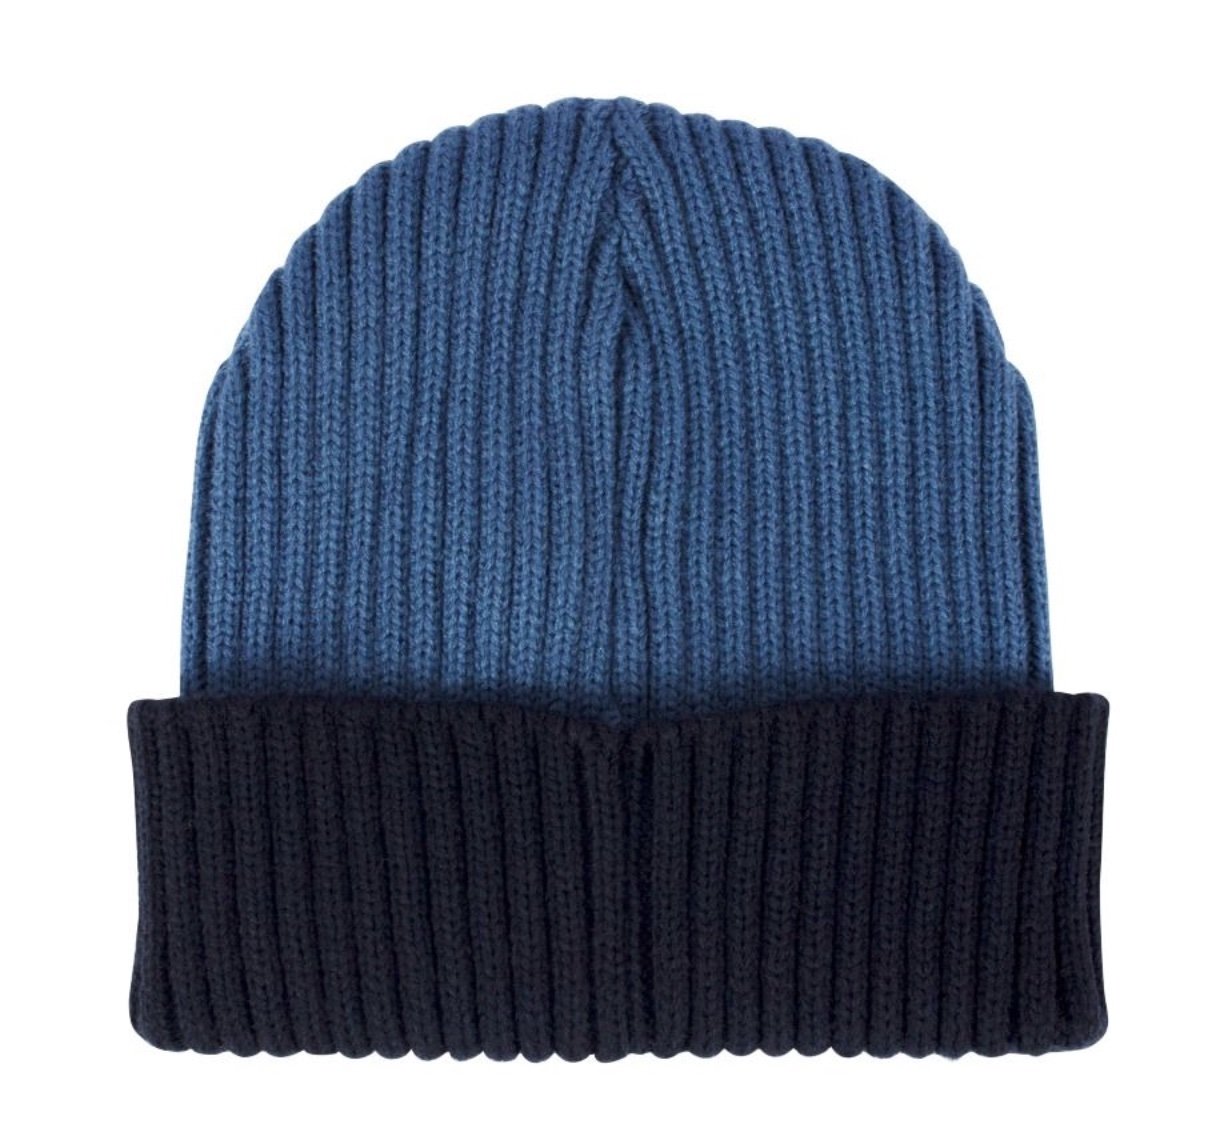 Fairtex Beanie Winter Hat - BN7 - Blue - Nylon Bag Packaging Included - image 2 of 6